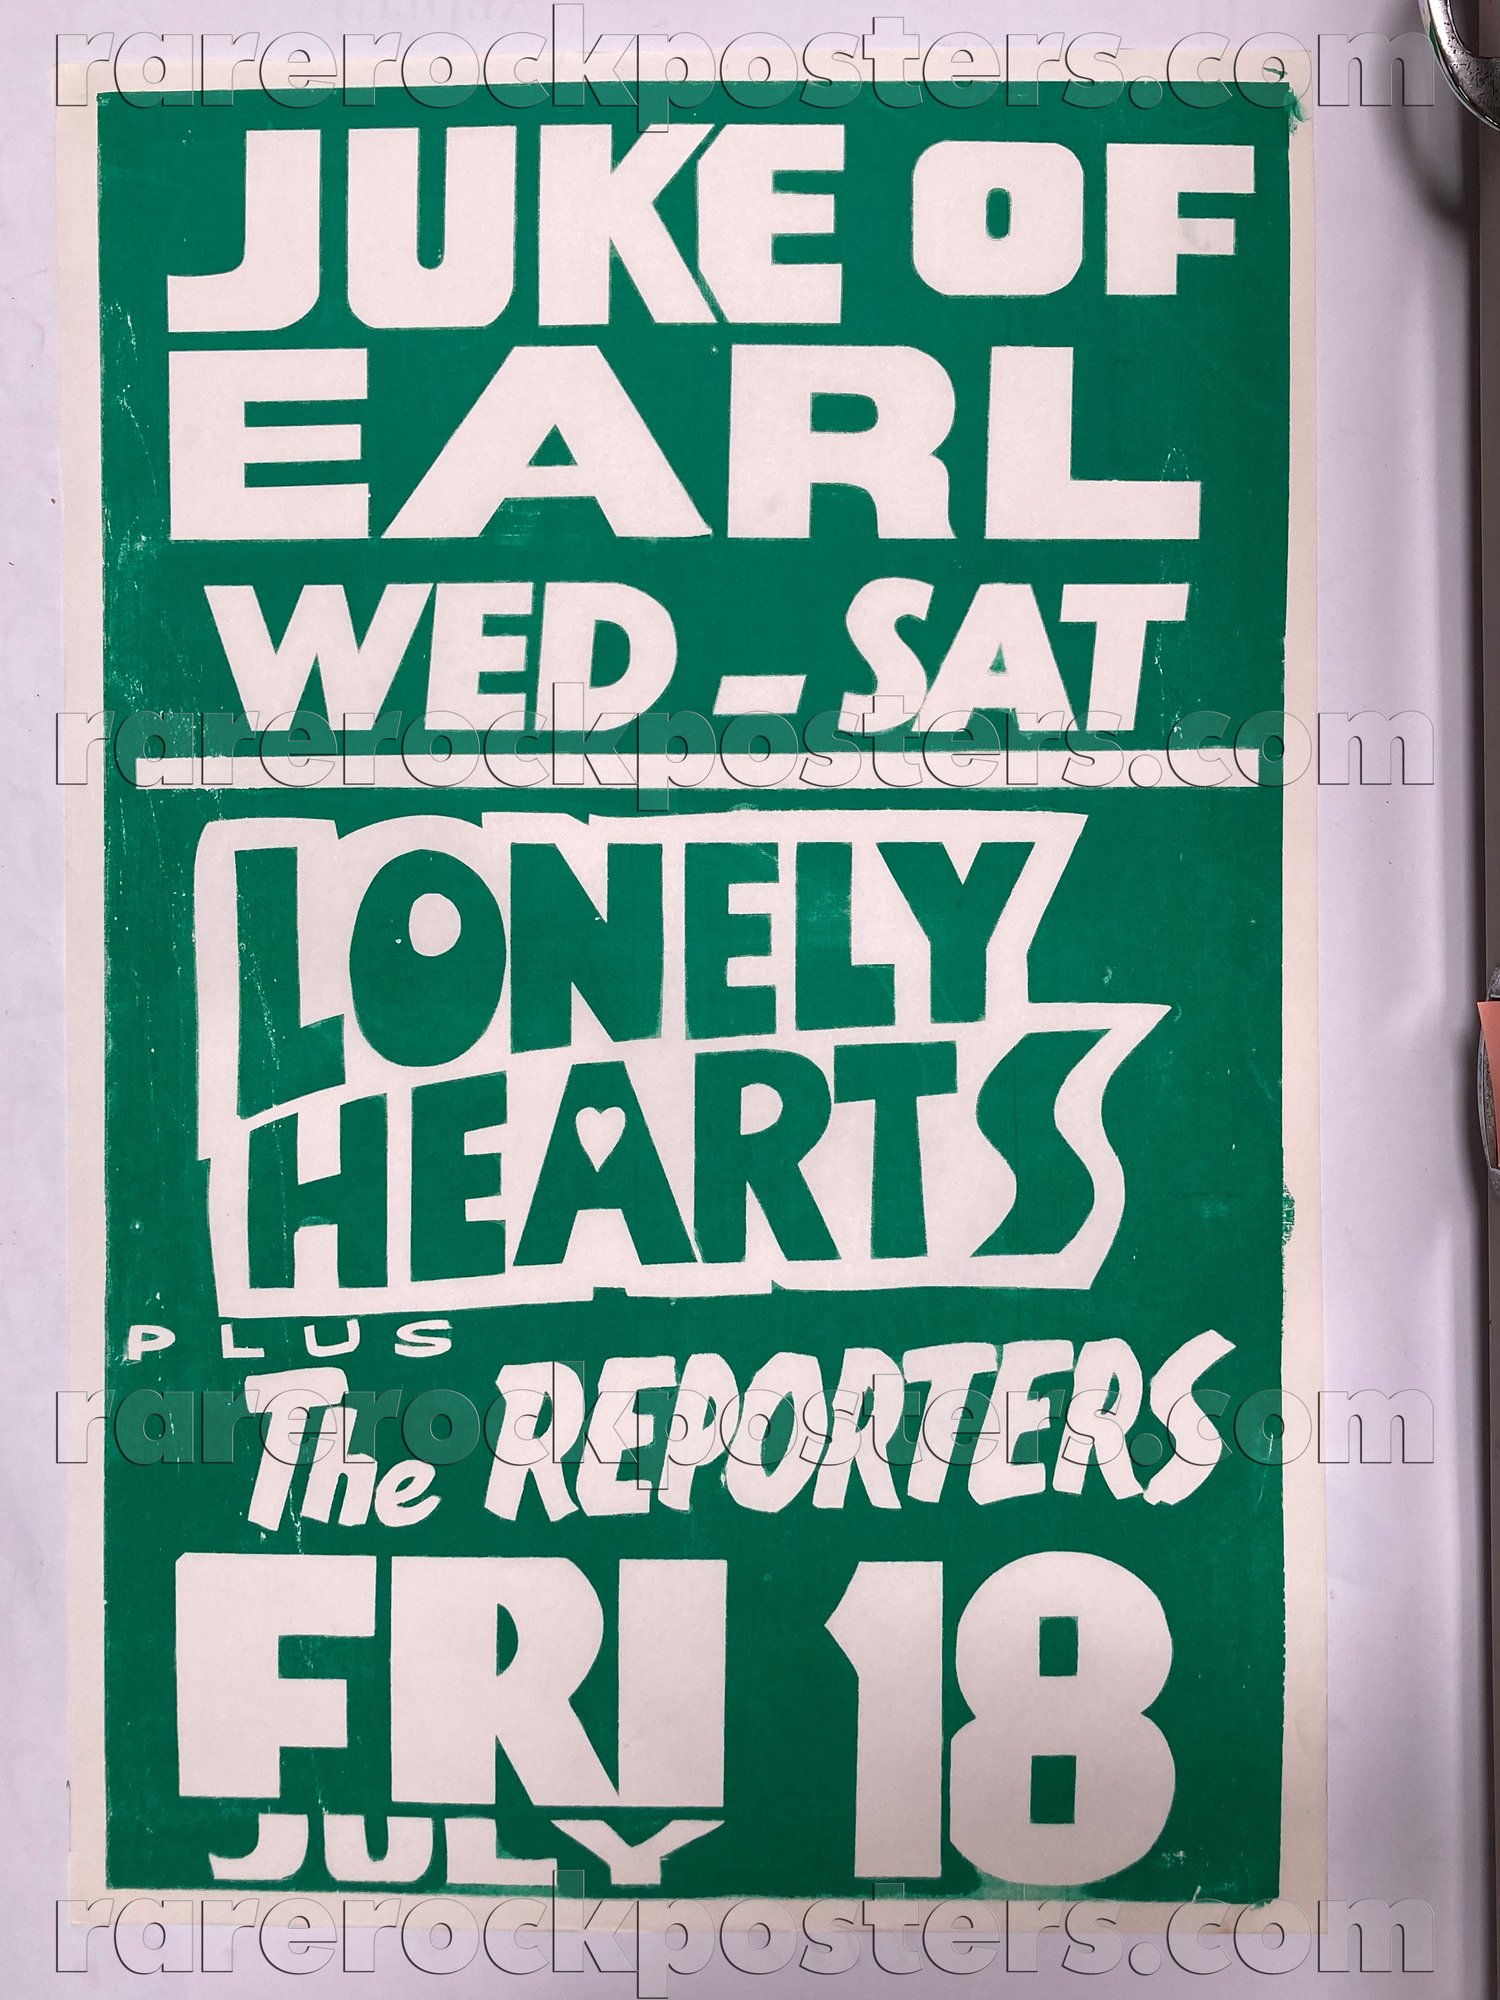 LONELY HEARTS / REPORTERS ~ ORIGINAL 1980 AUSTRALIAN GIG POSTER ~ DUKE OF EARL ~ EARLWOOD